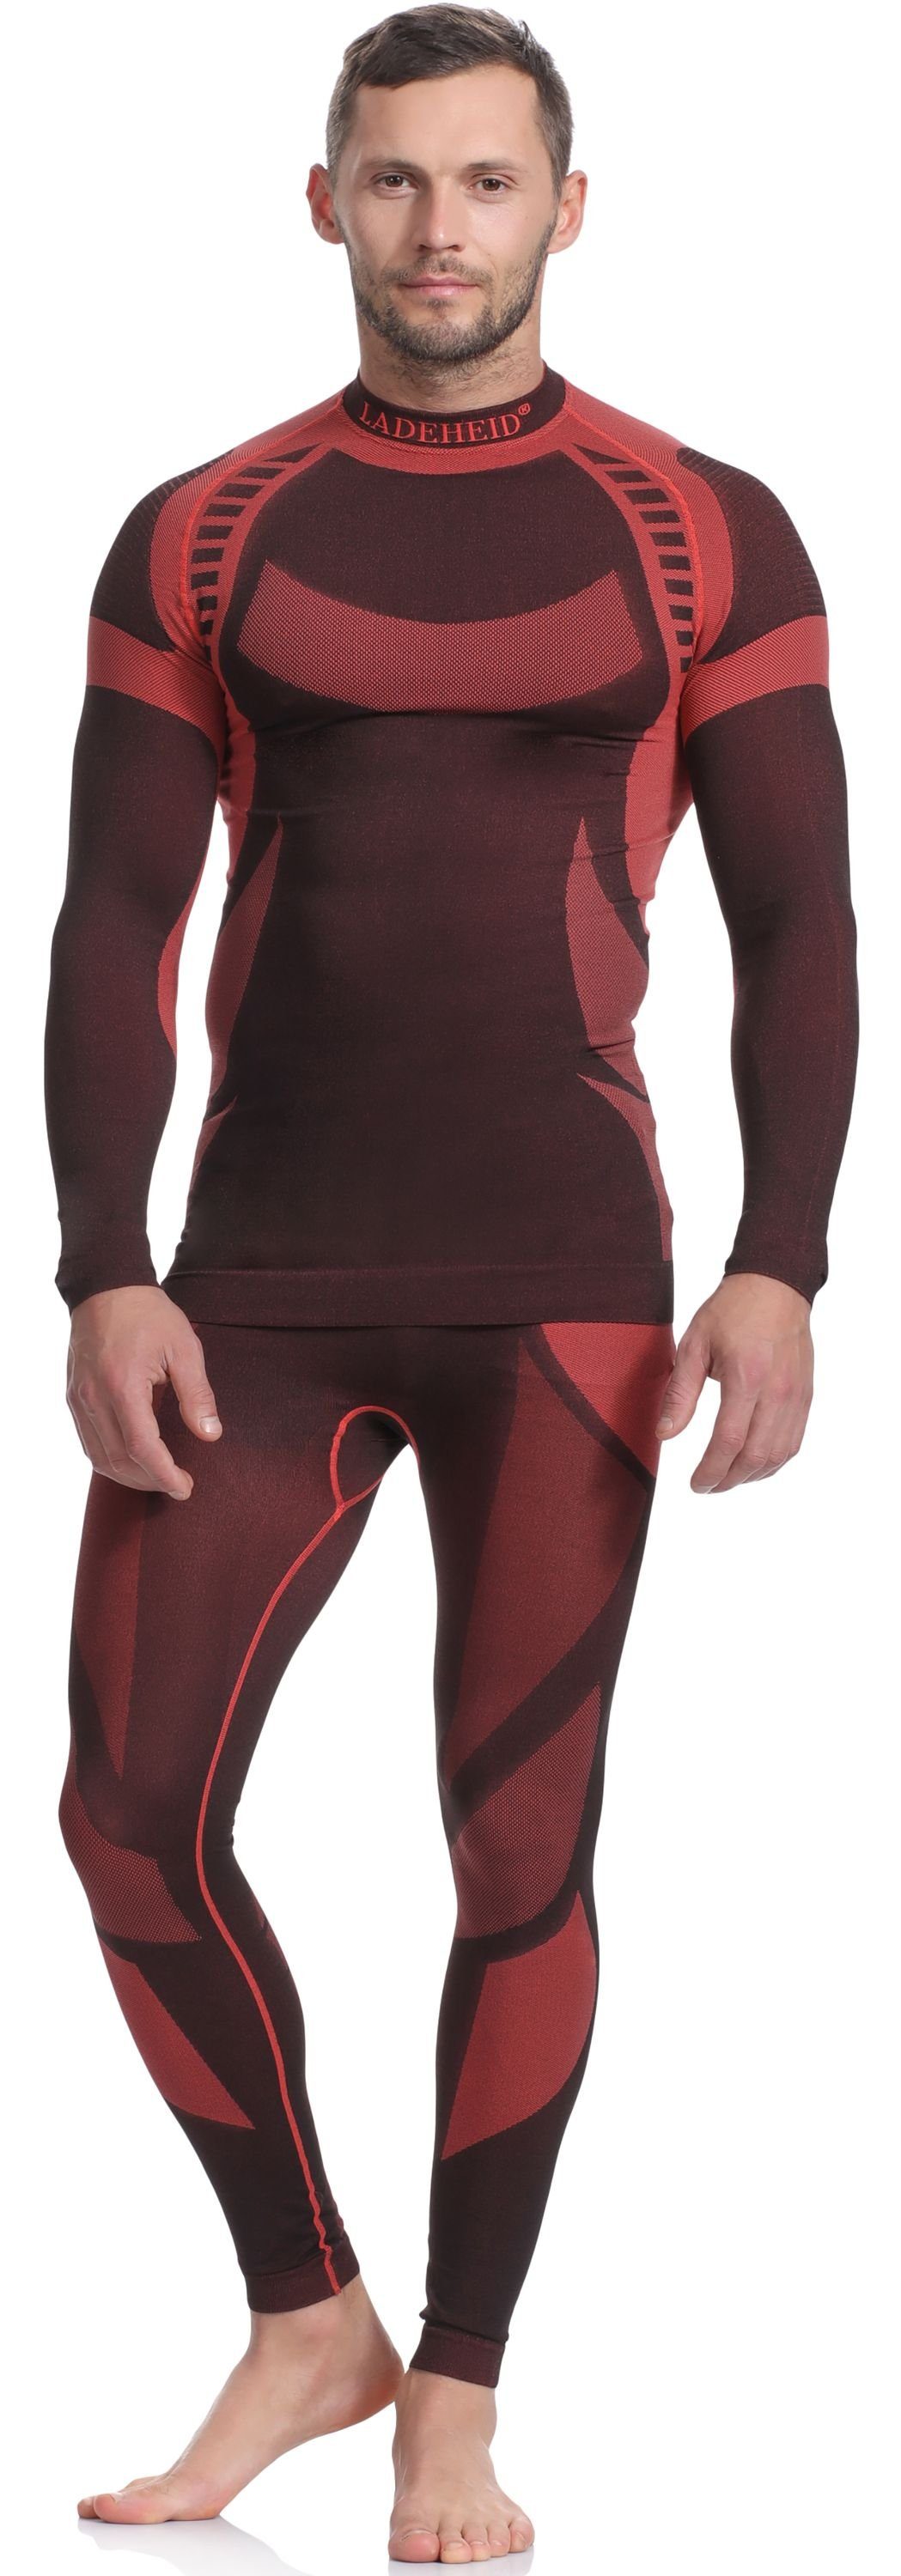 Funktionsunterwäsche Shirt langarm (Set, Schwarz/Rot Thermoaktiv Funktionsunterhemd Herren Unterhose mit Funktionsunterhose) Ladeheid Set